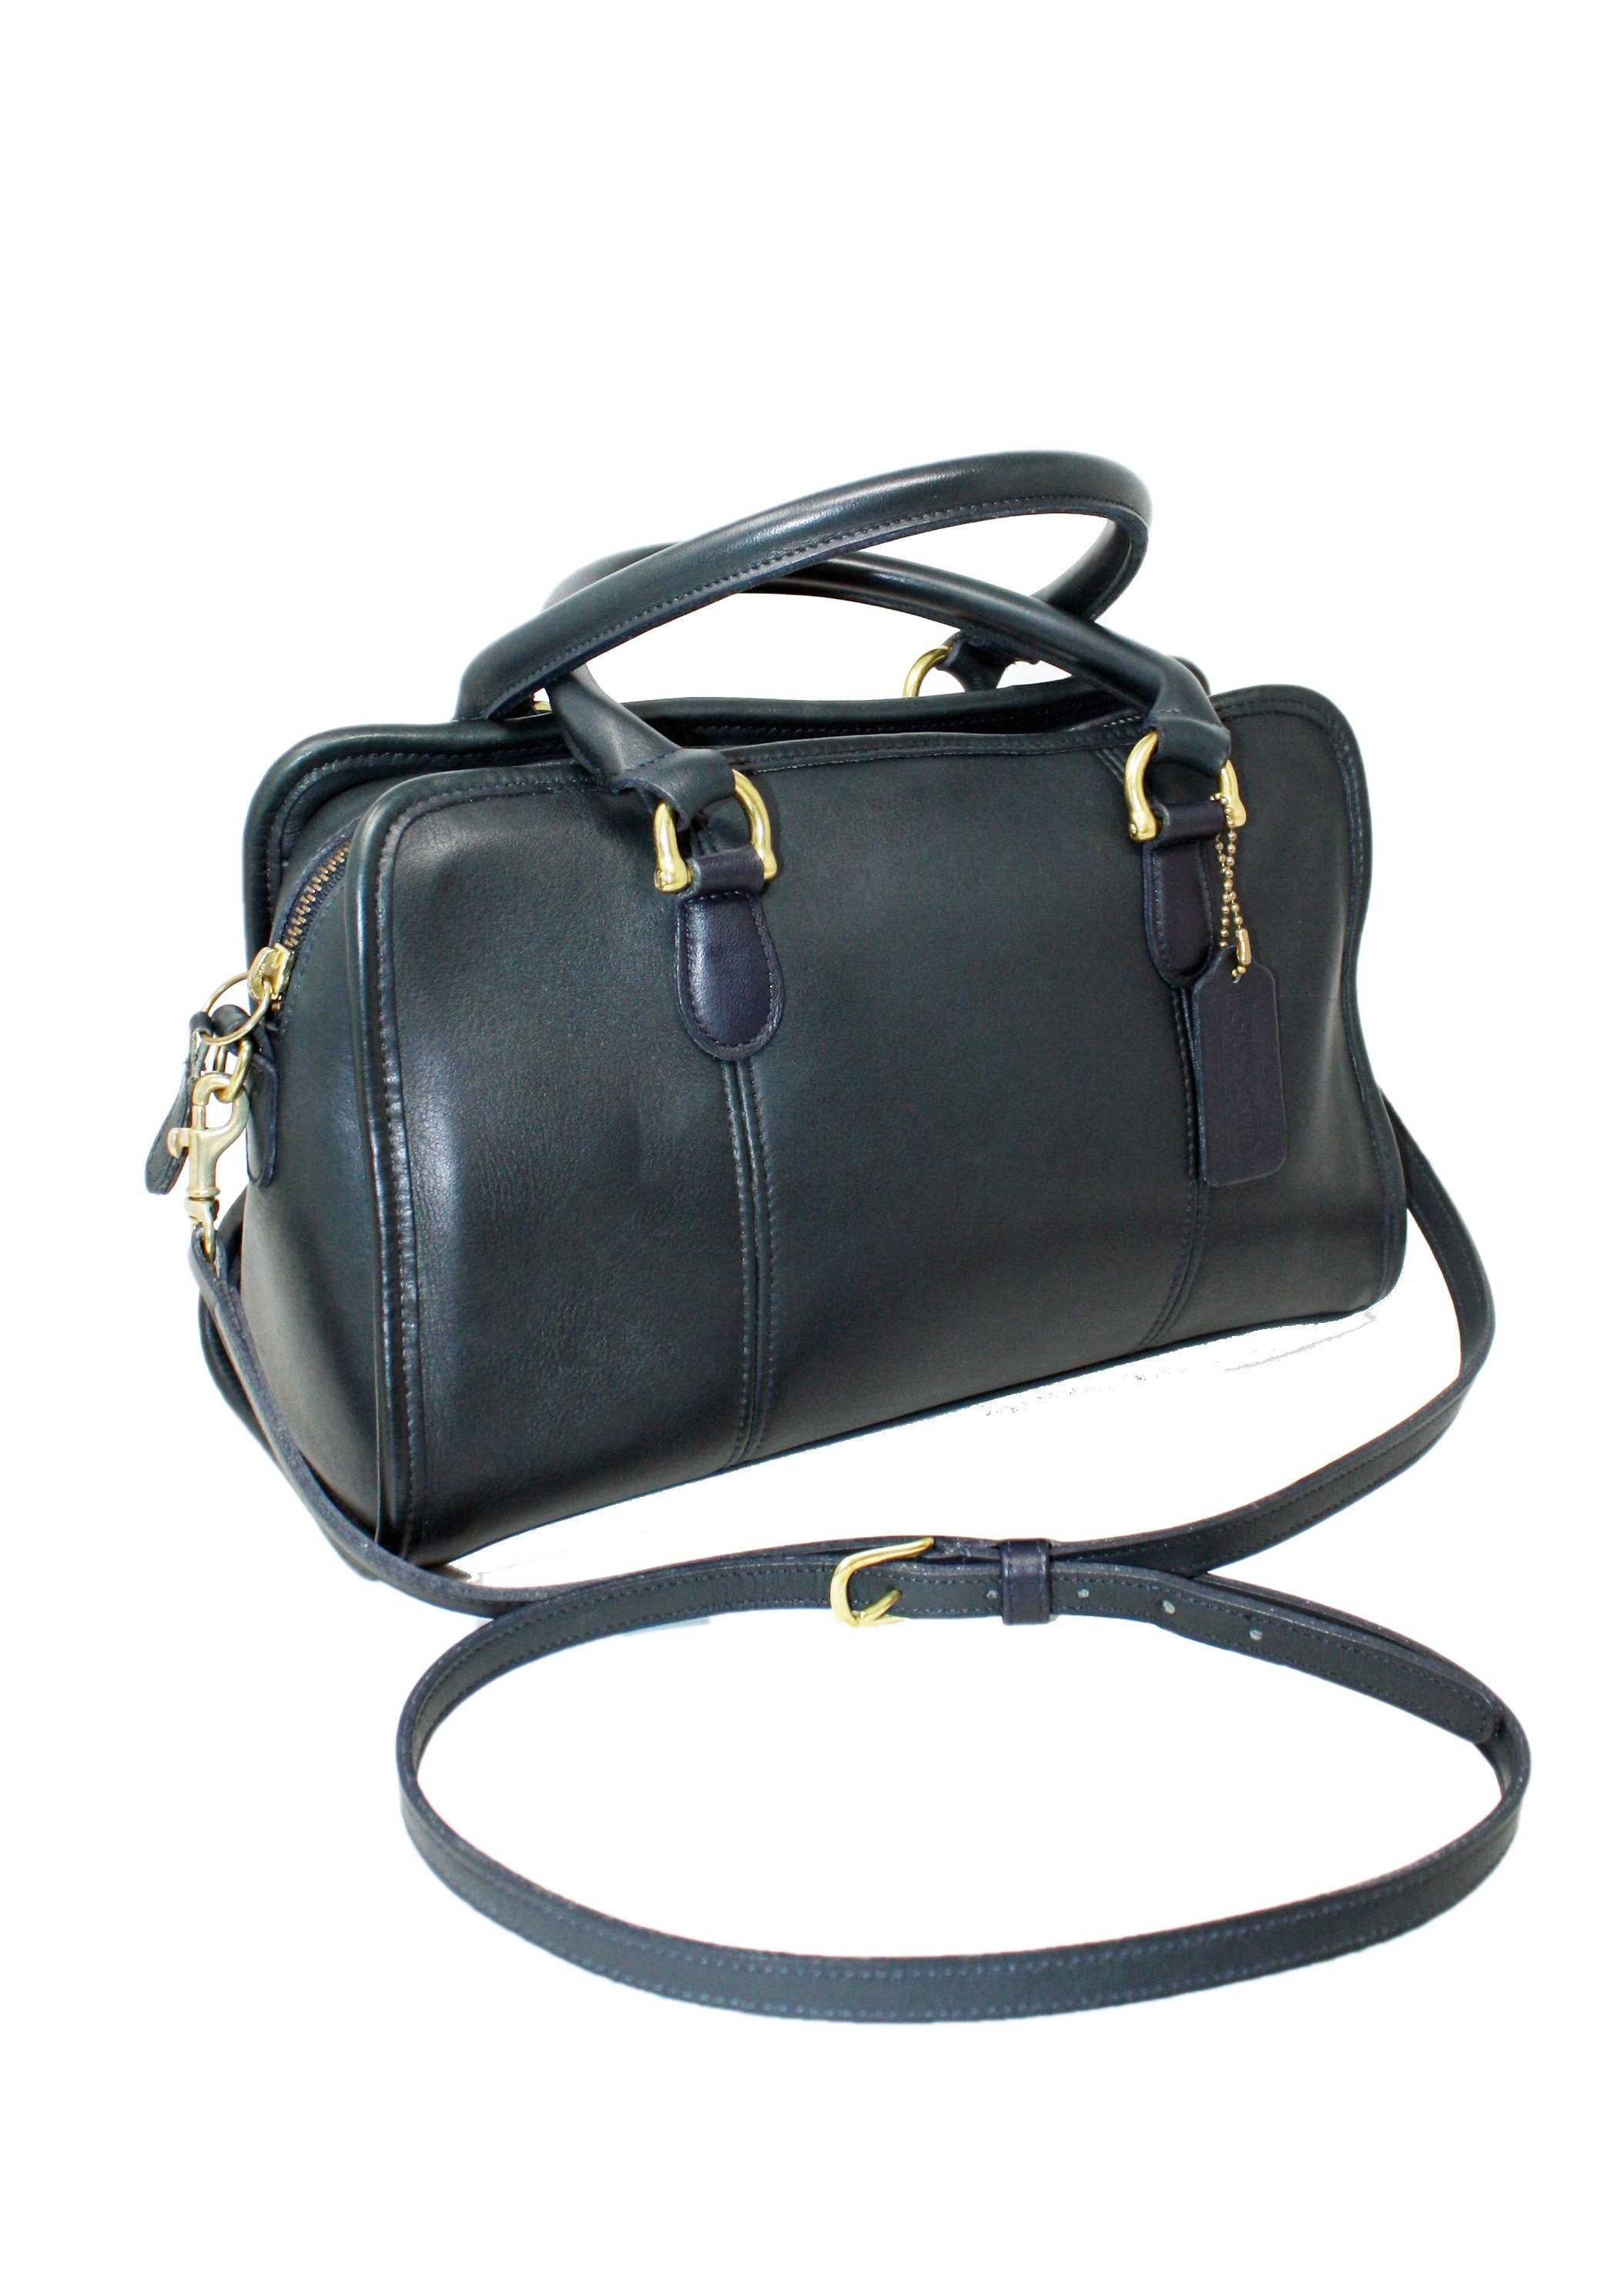 Coach Speedy Doctor Handbag Black Leather 